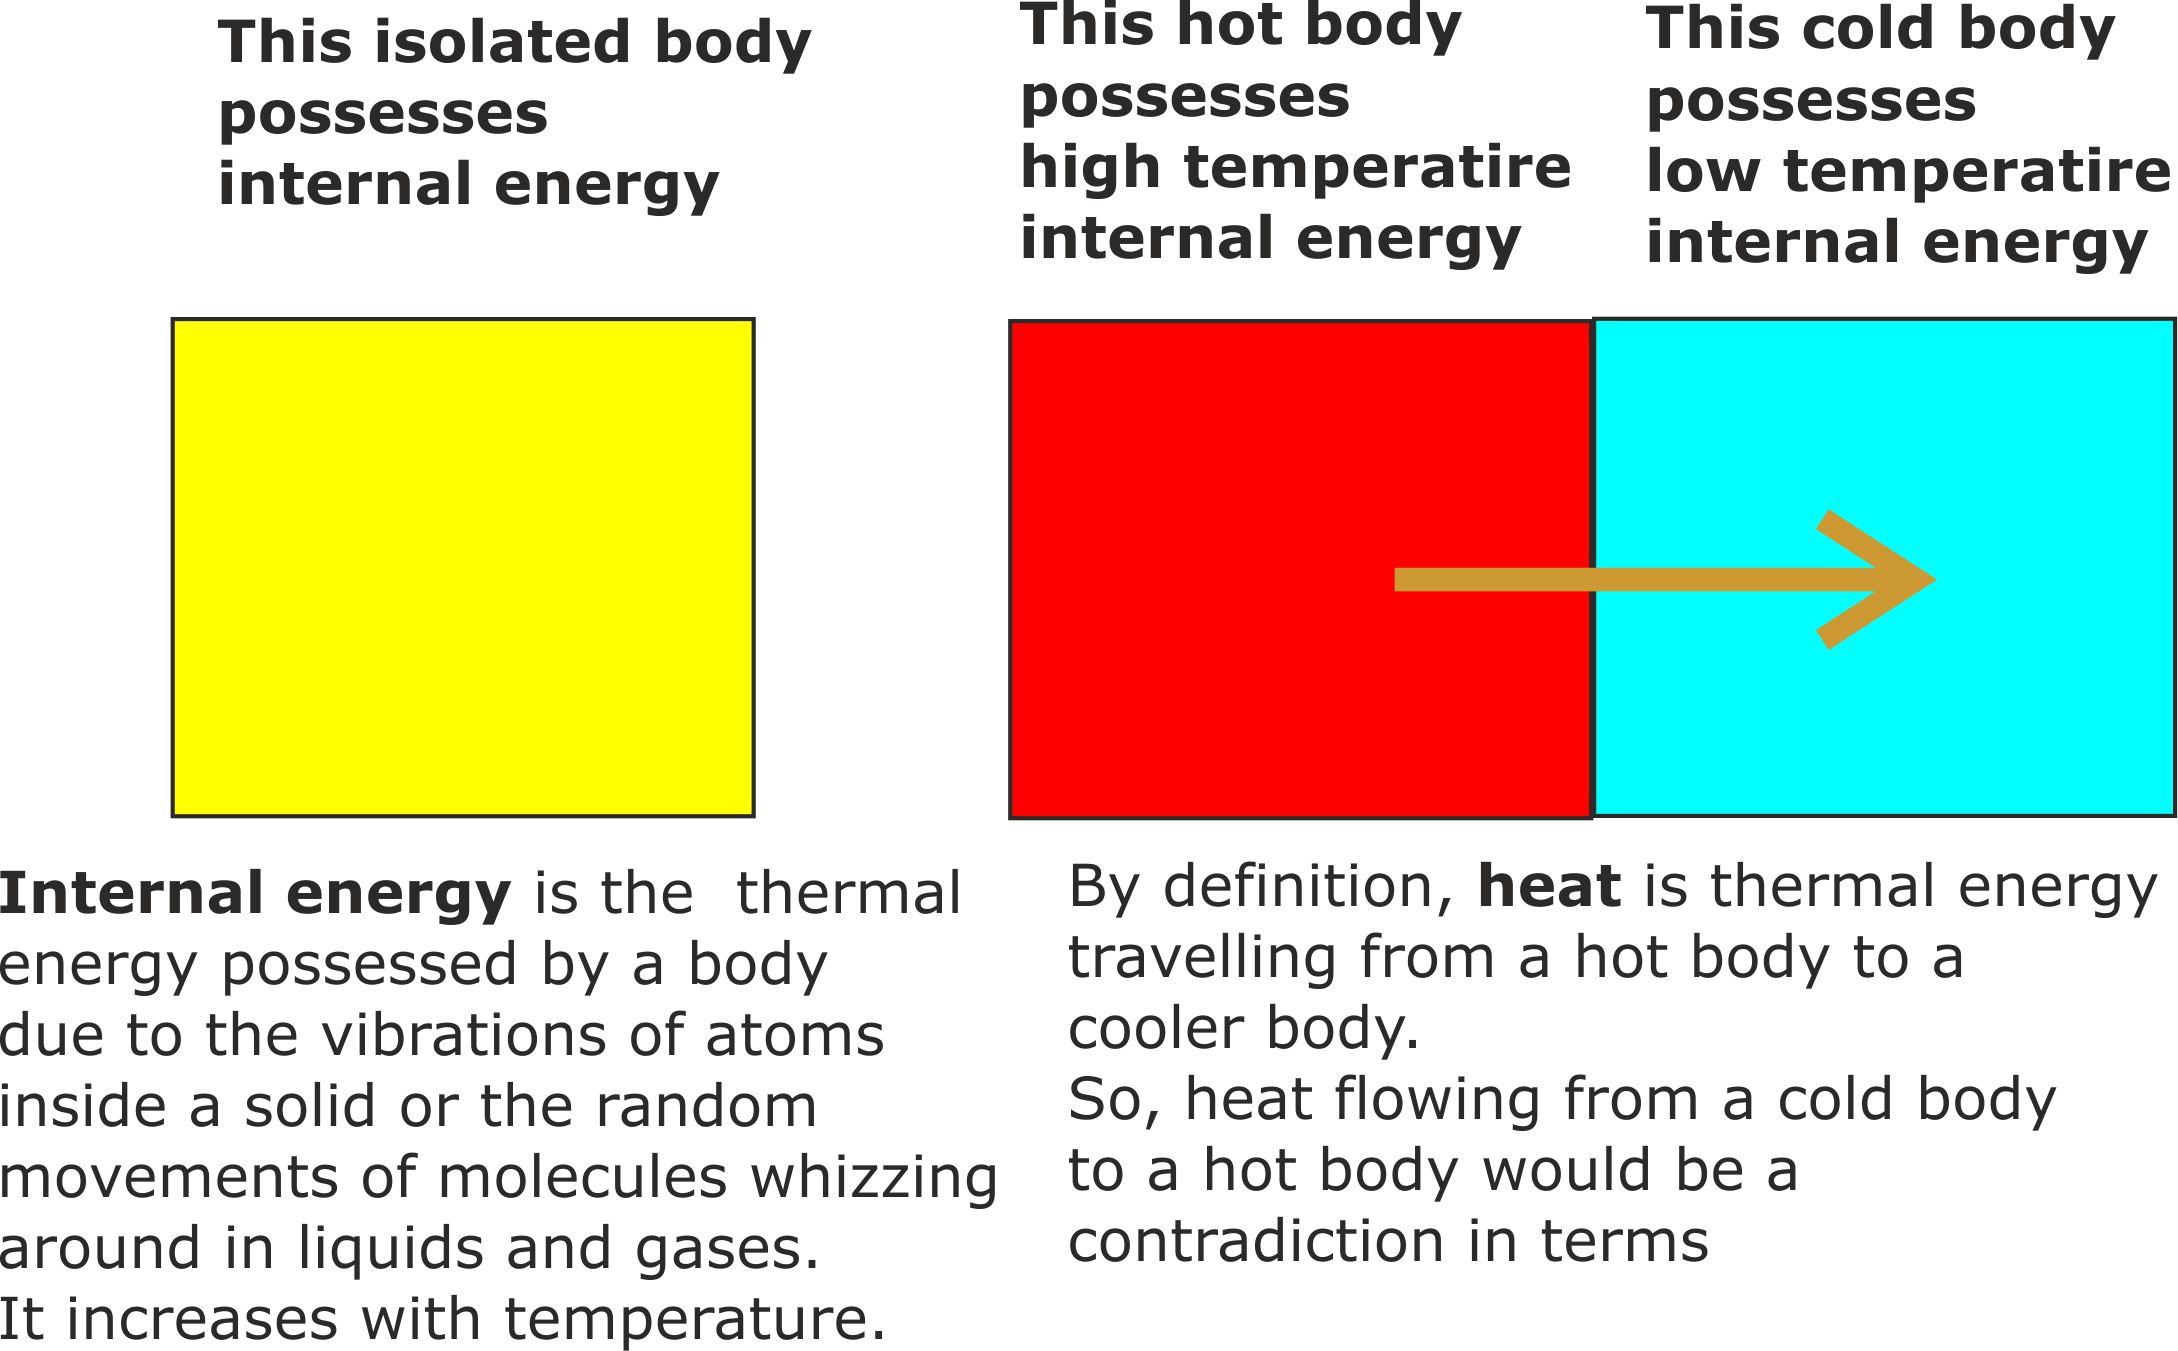 Internal energy and heat